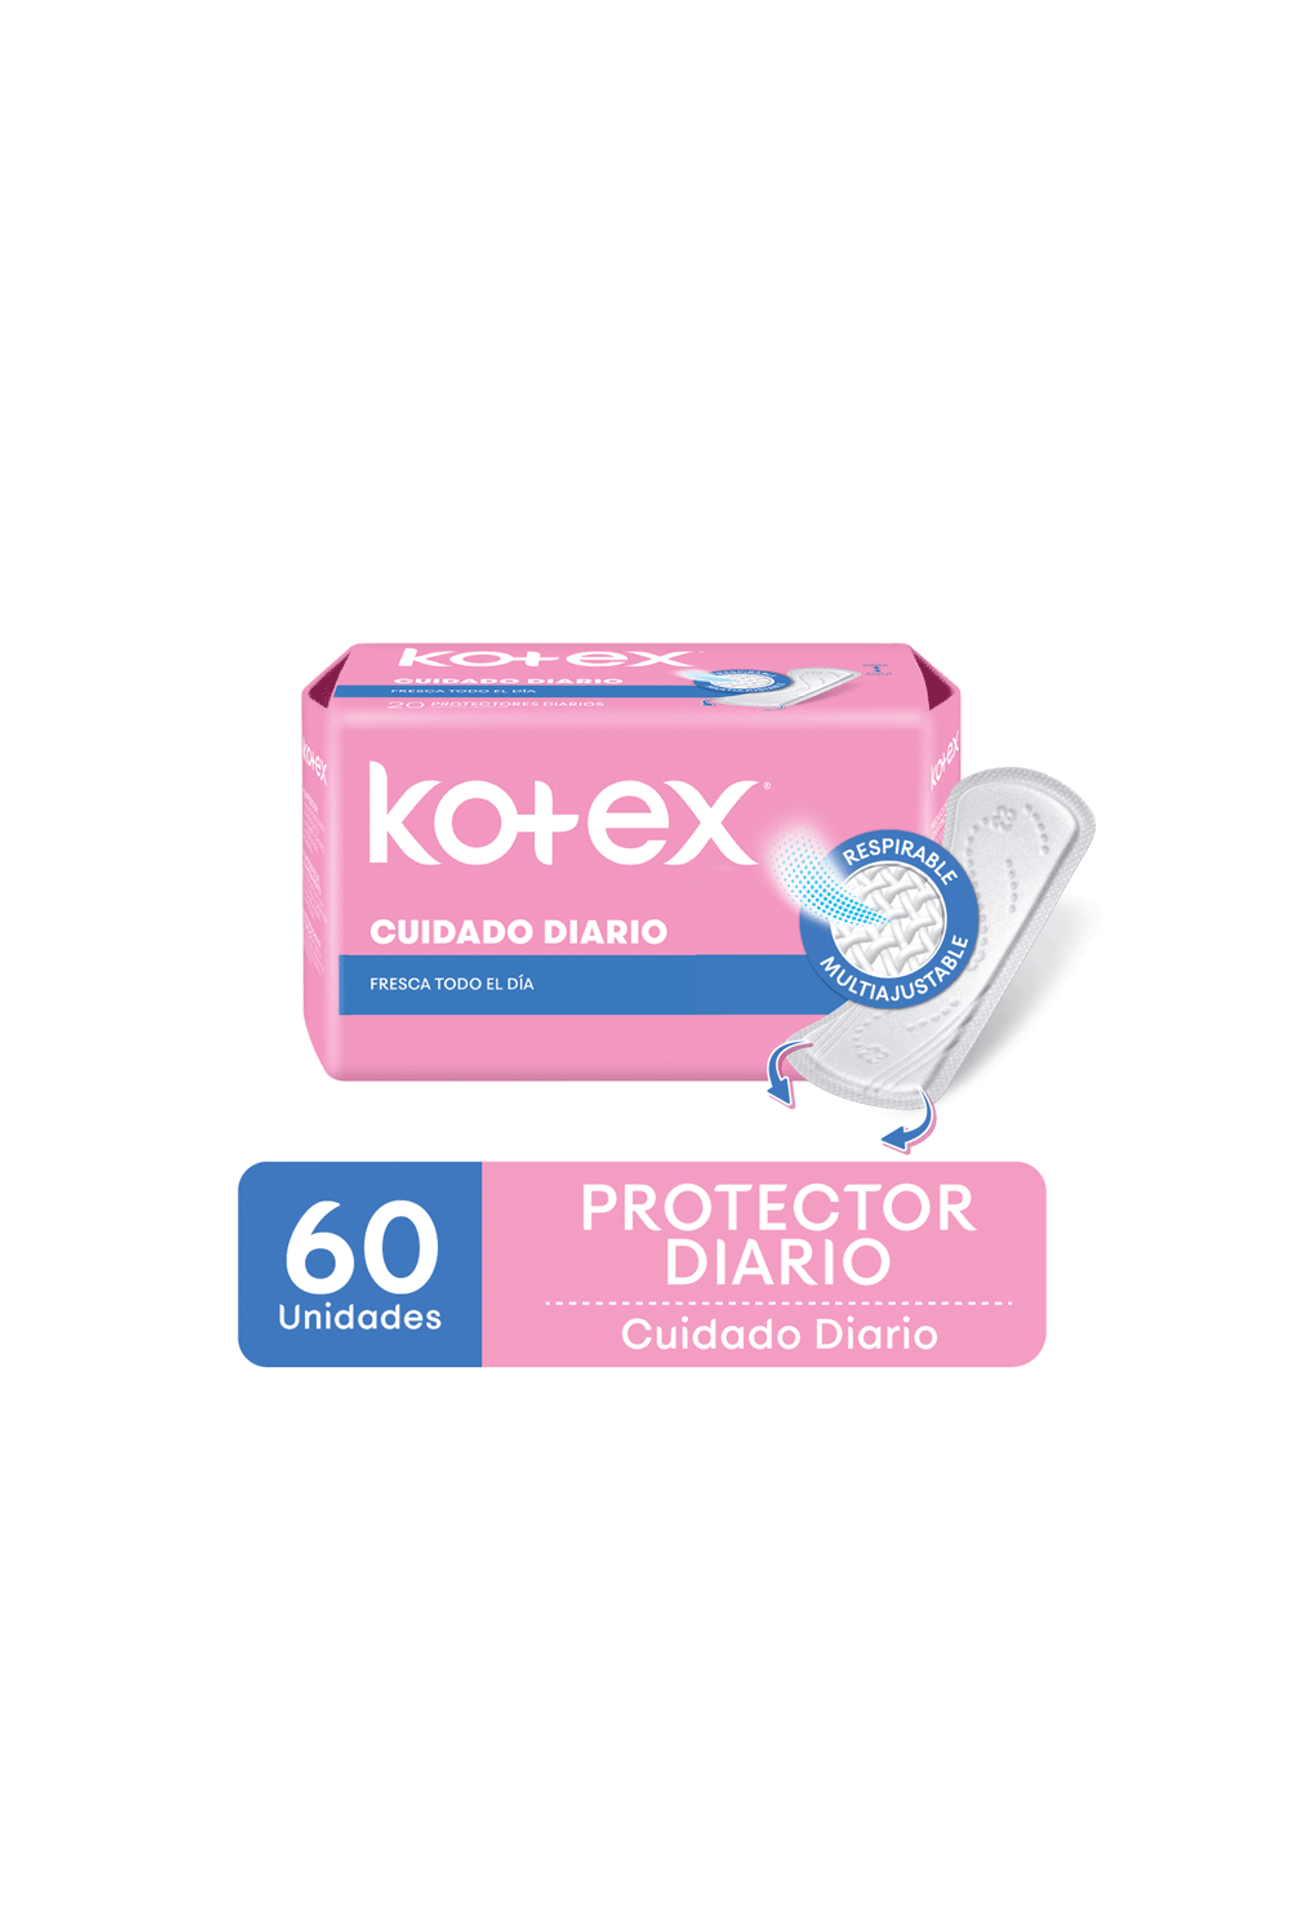 2095621_Kotex-Protector-Diario-Multiforma-sin-perfume-x-60-unid_img2